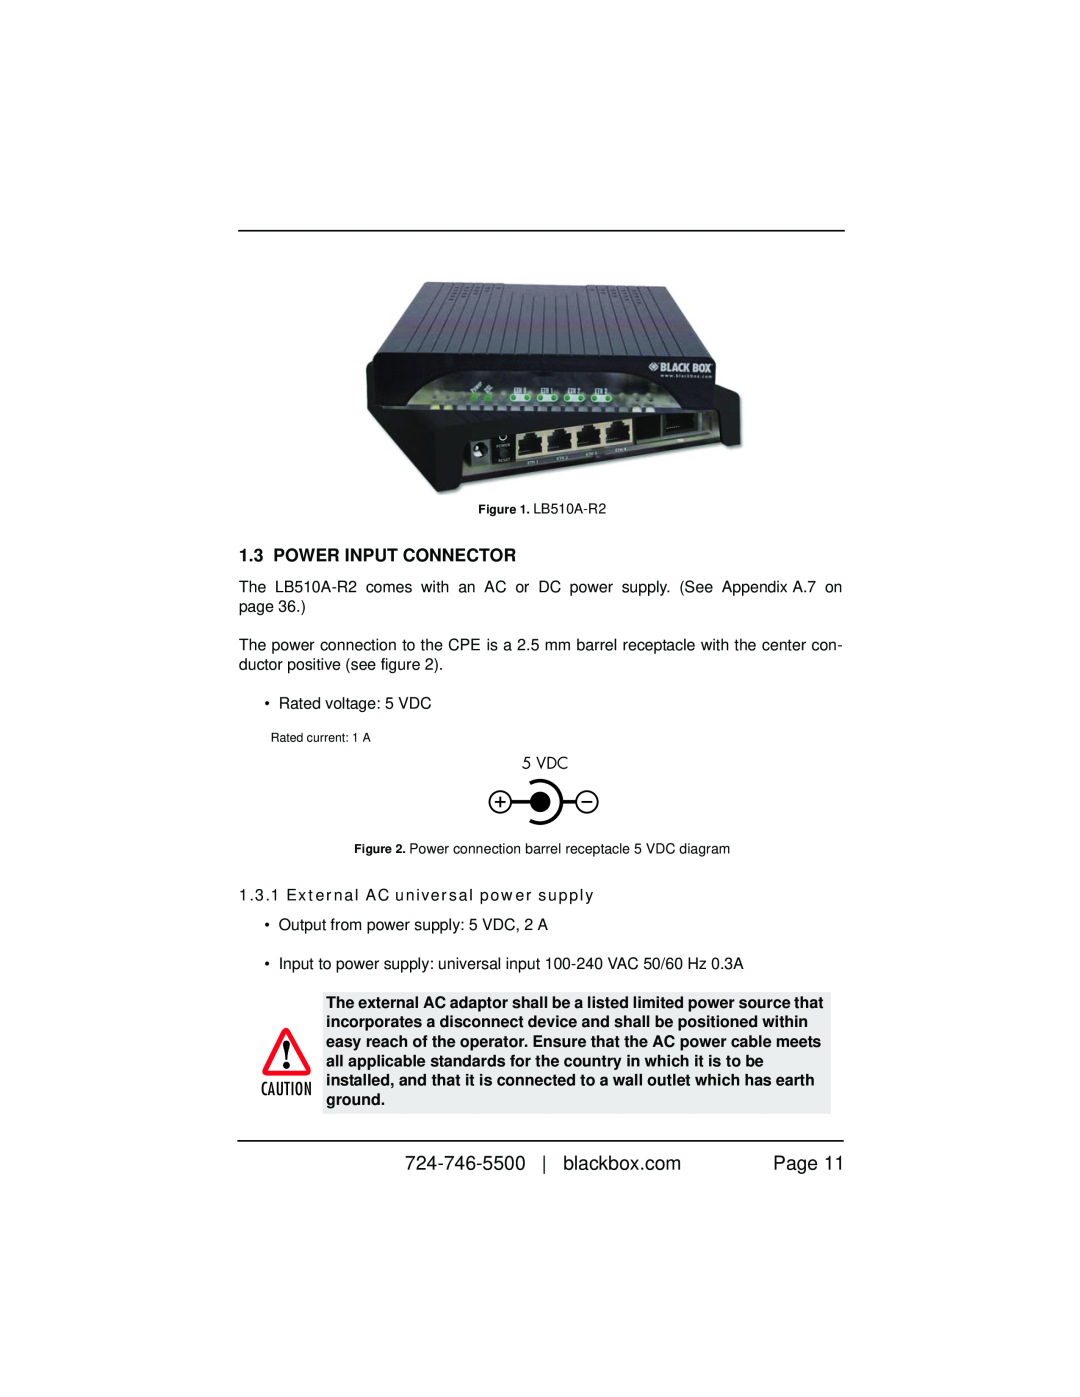 Black Box 10BASE-T/100BASE-TX G.SHDSL Two-Wire Extender/NTU Power Input Connector, External AC universal power supply 